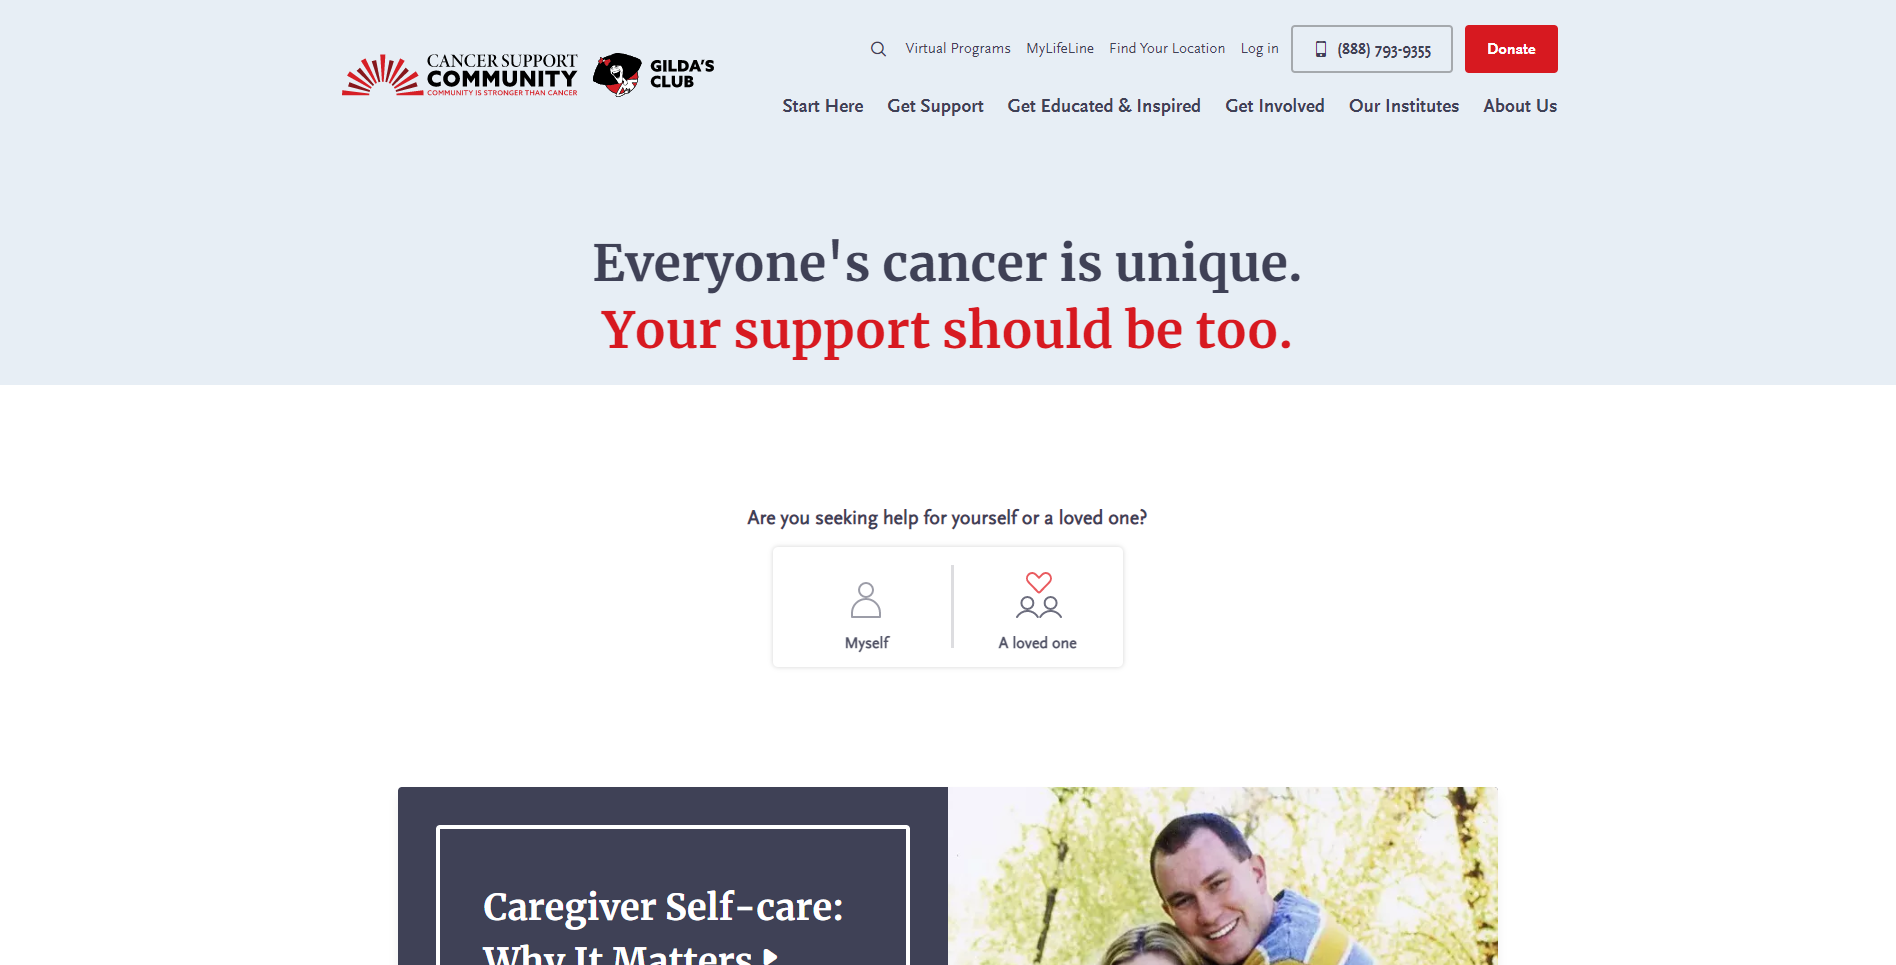 Cancer Support Community Helpline